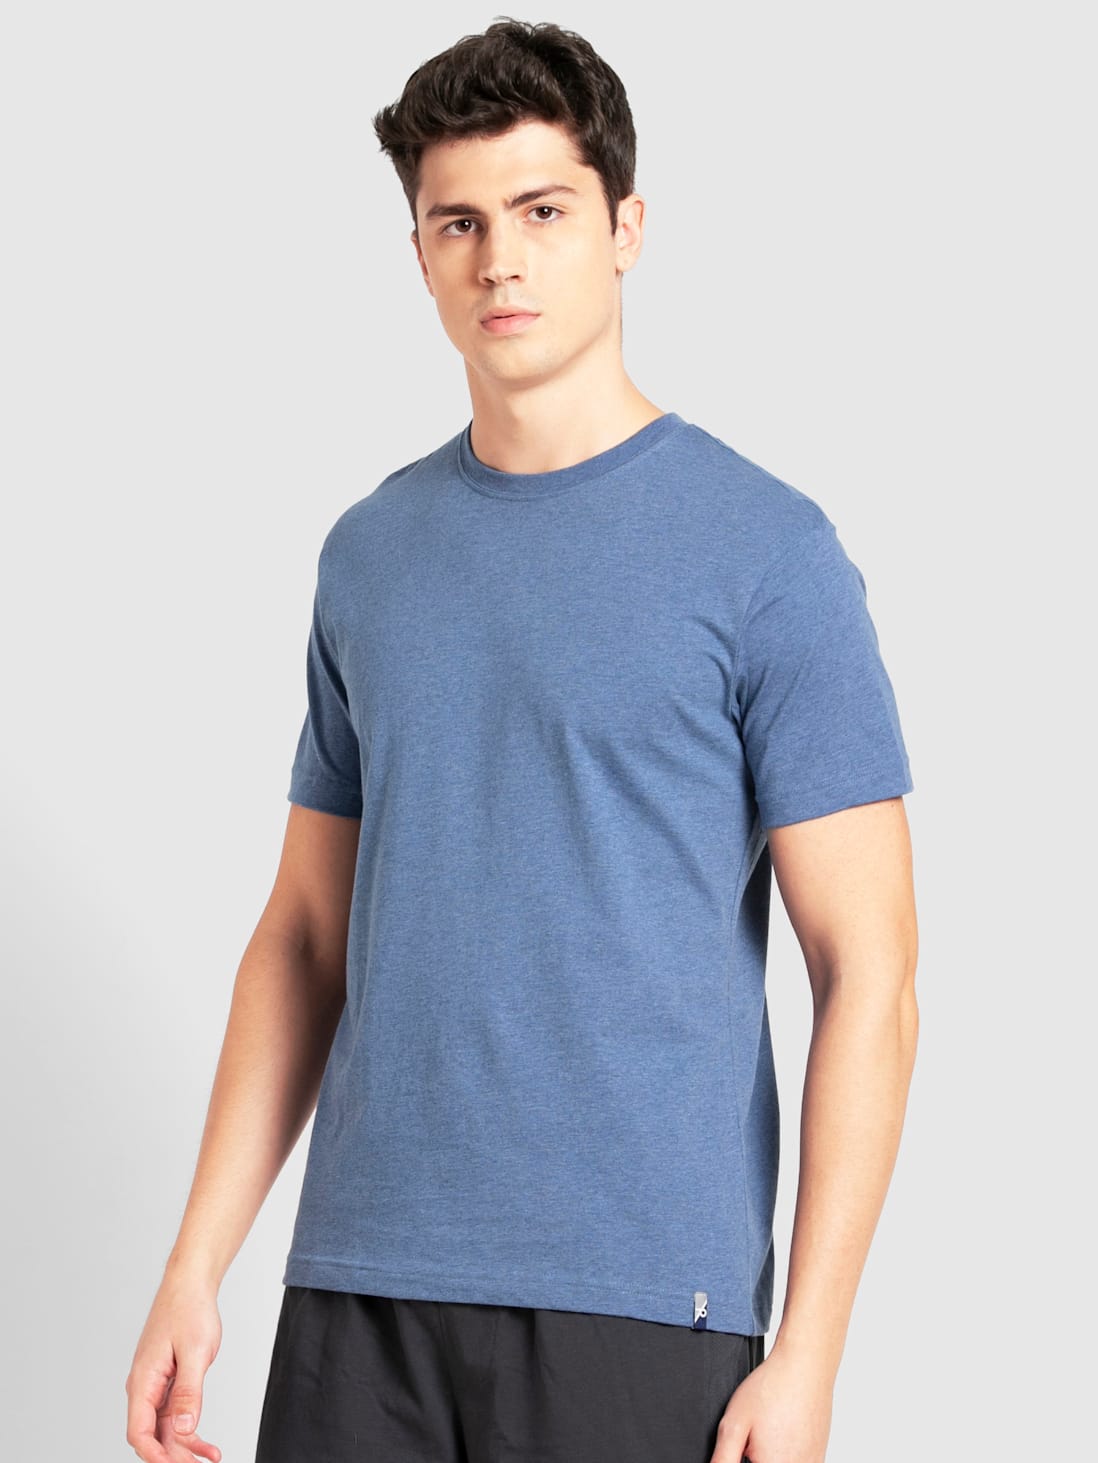 Jockey Mens Round Neck Half Sleeve T-Shirt-2714 – Snow White